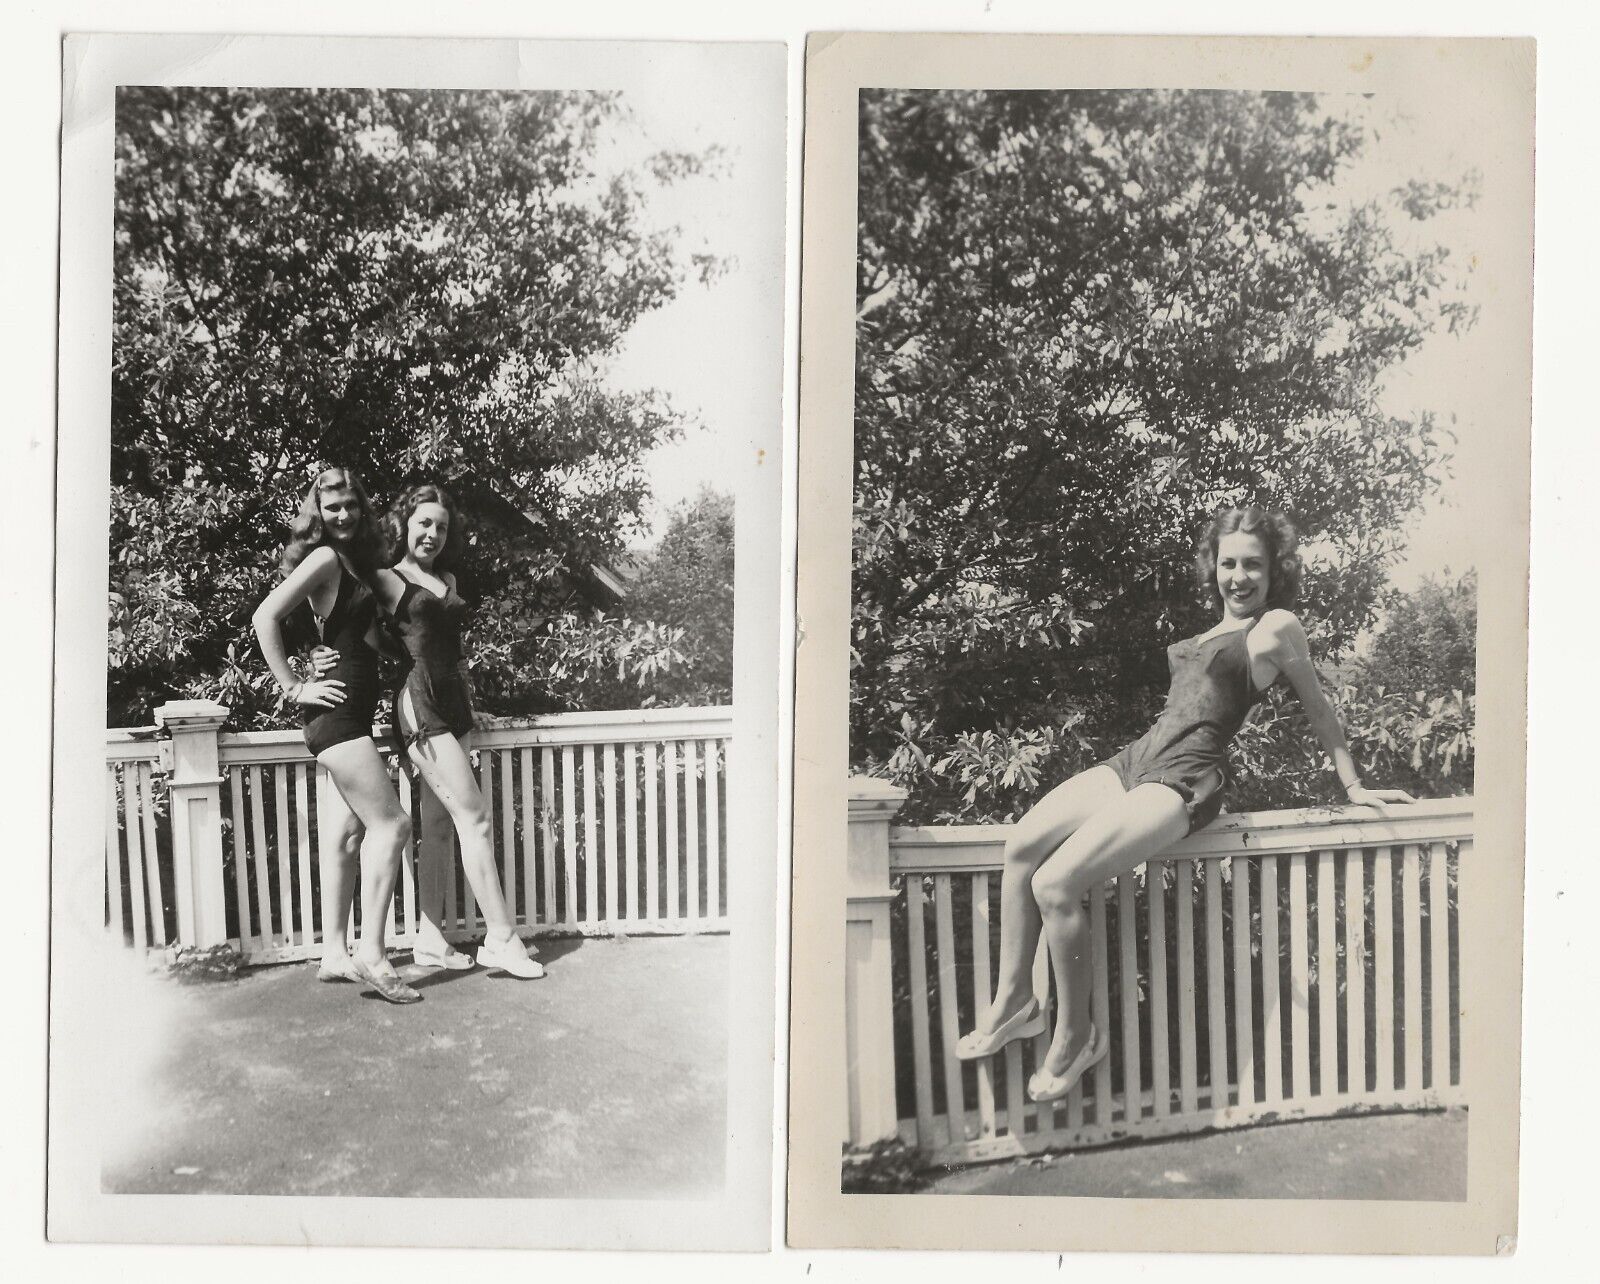 1947 sexy girls in bathing suits, pinup, original snapshot photos